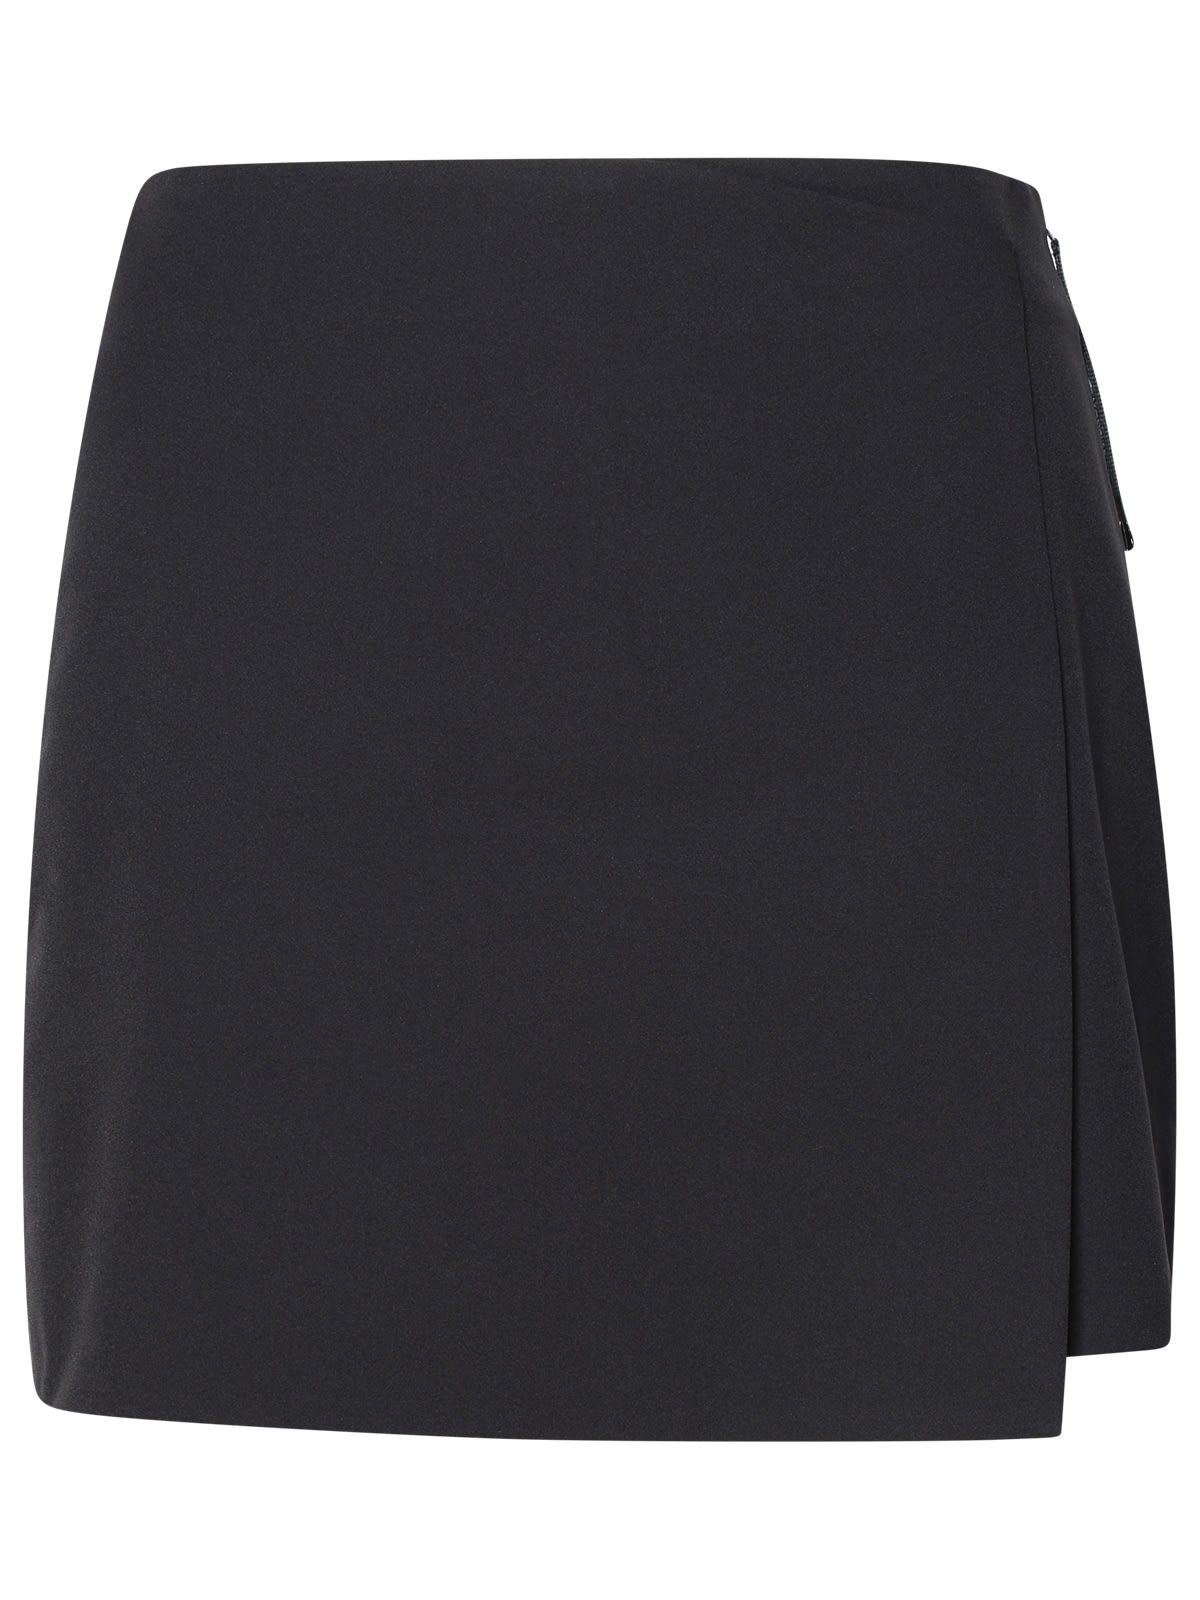 Black Polyester Blend Shorts